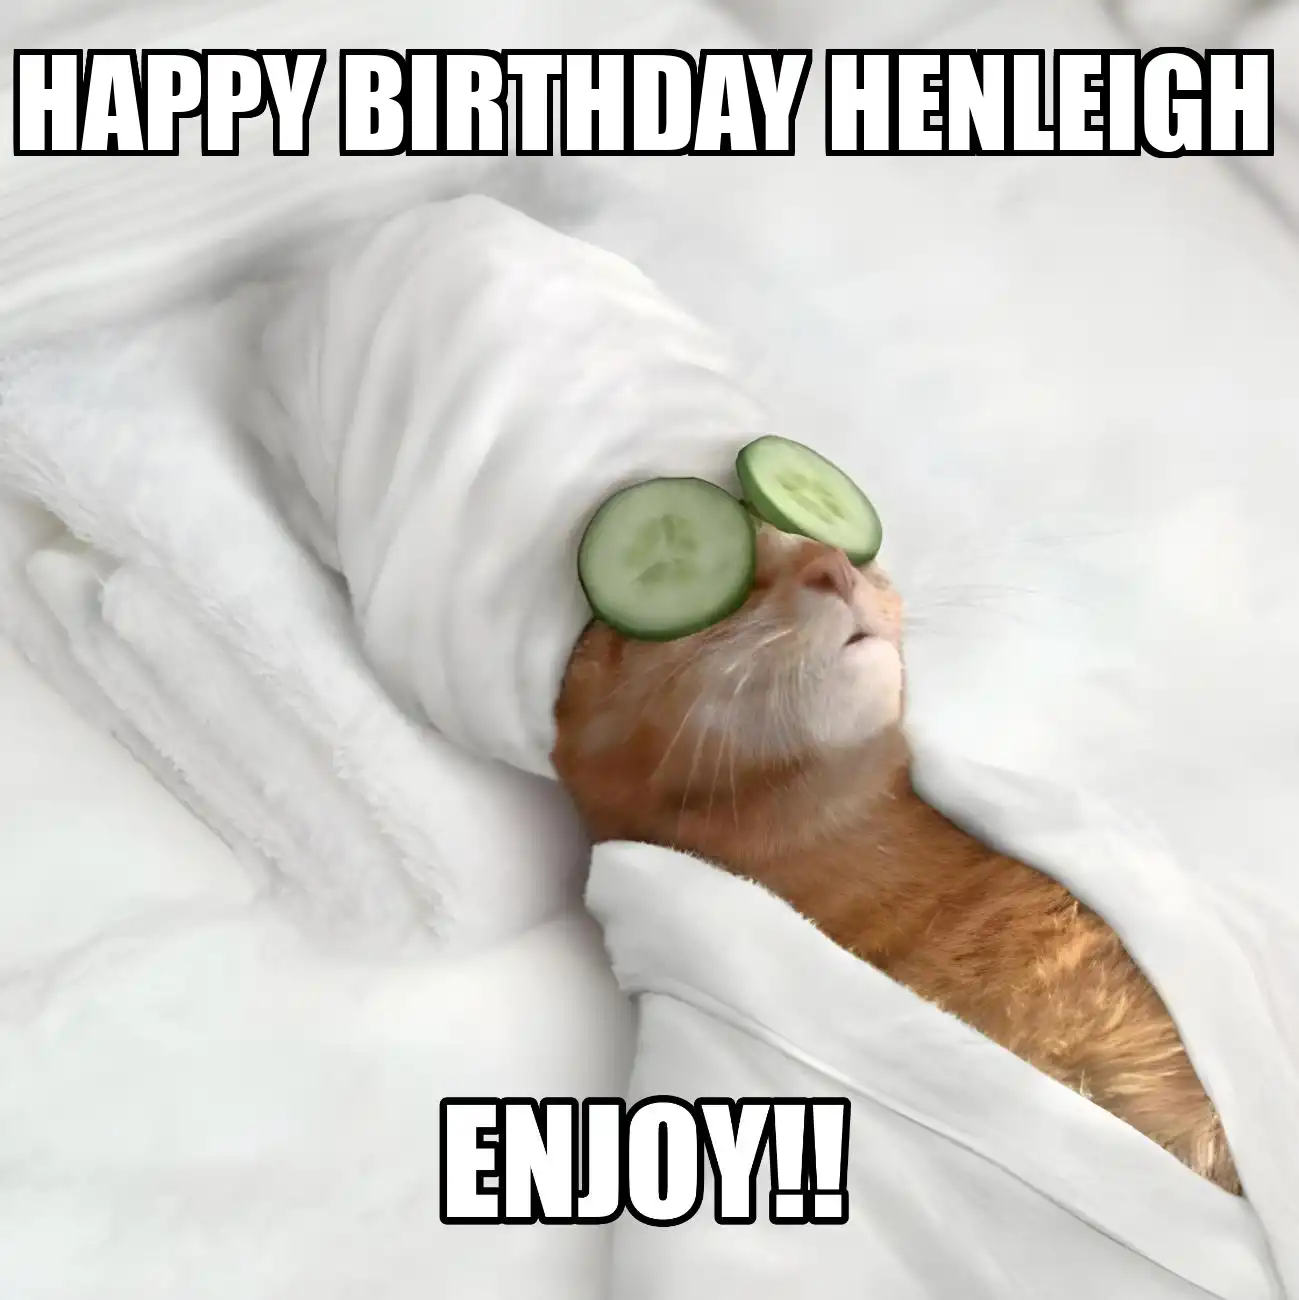 Happy Birthday Henleigh Enjoy Cat Meme